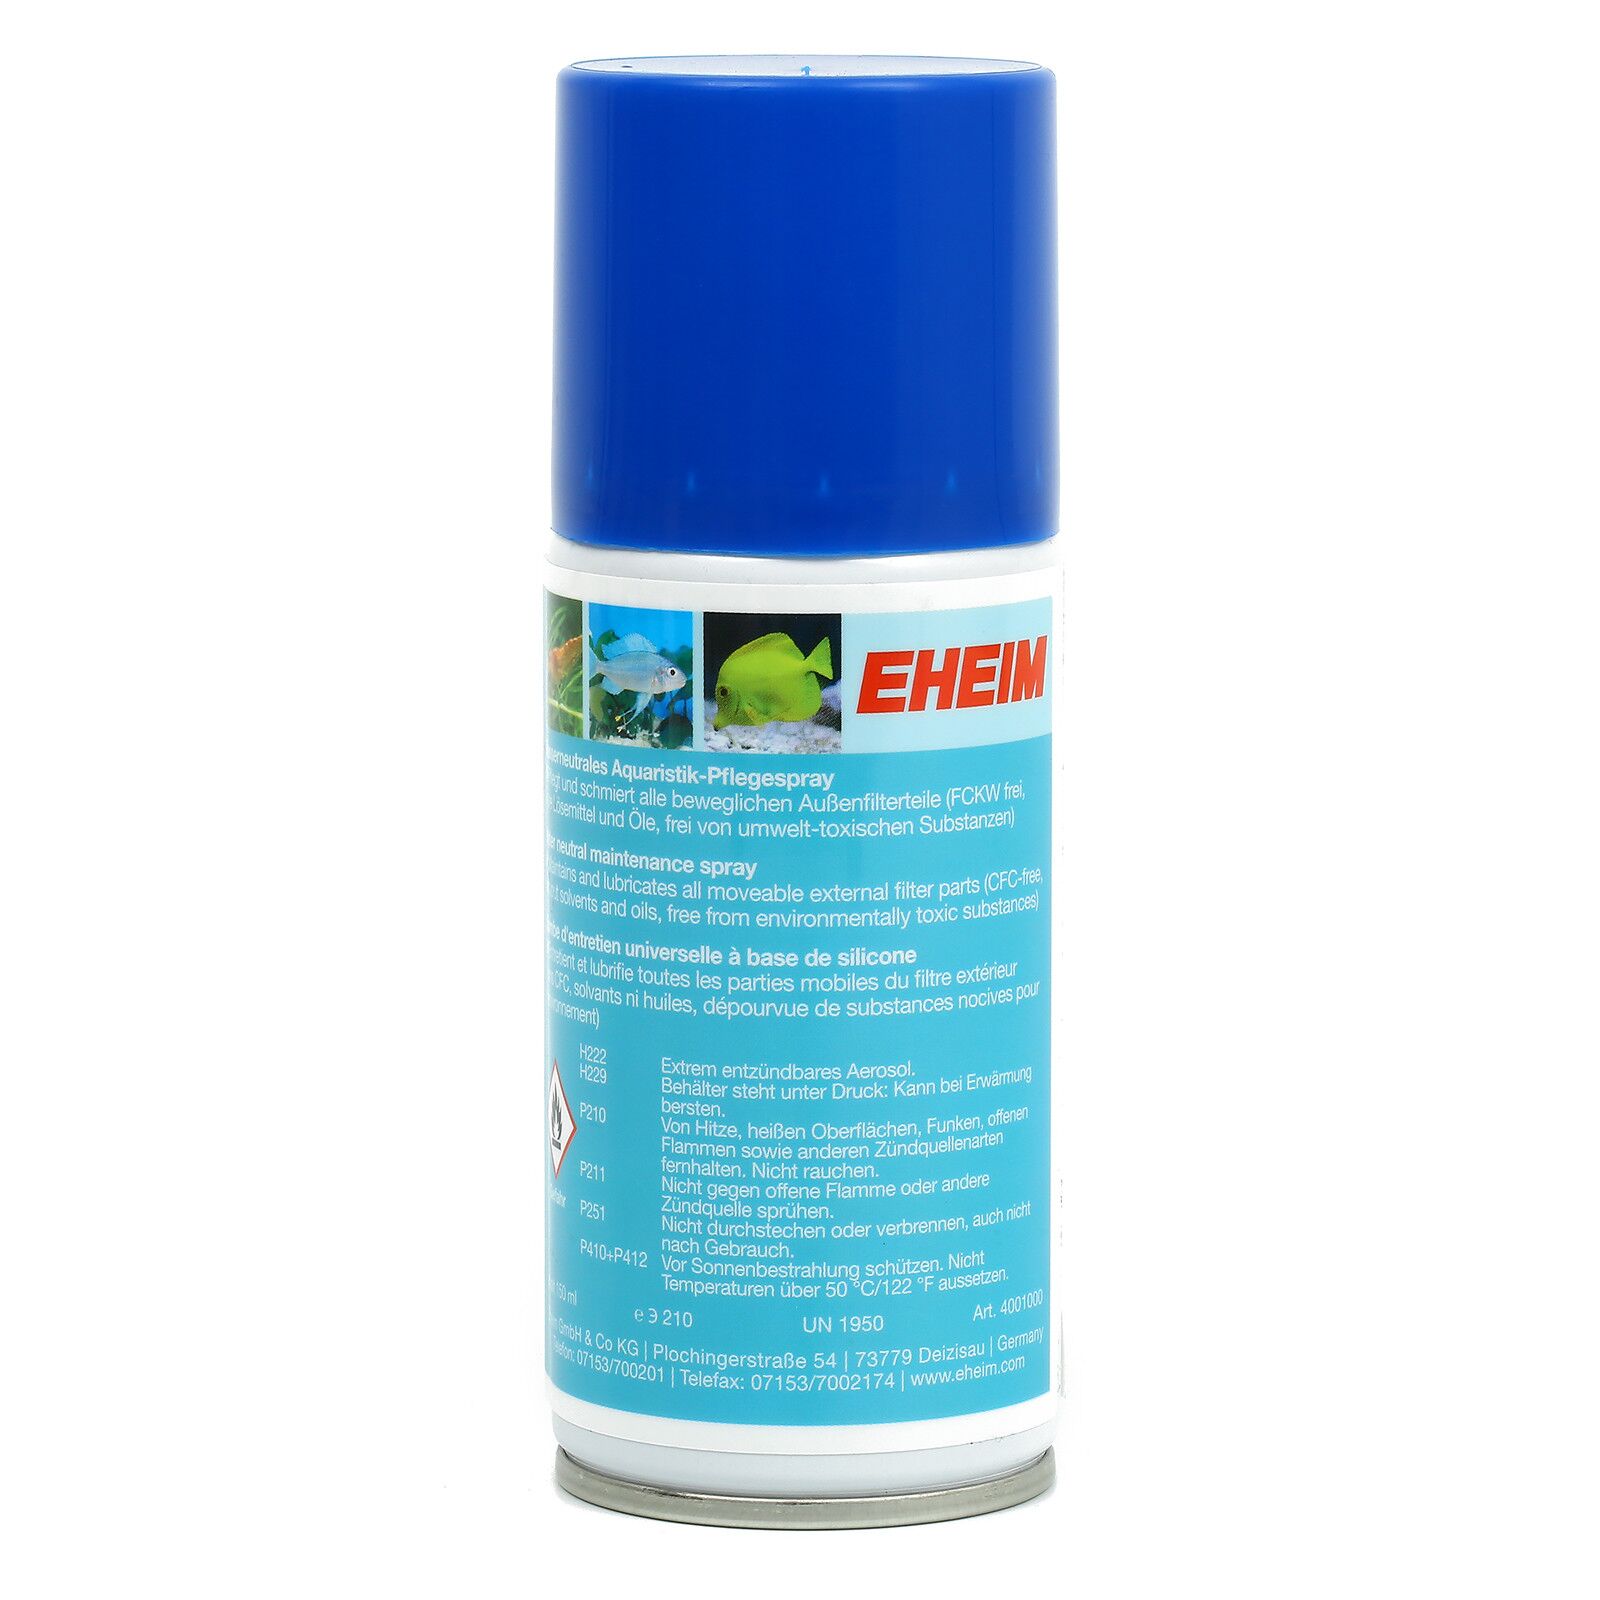 EHEIM - Aquaristic Maintenance Spray